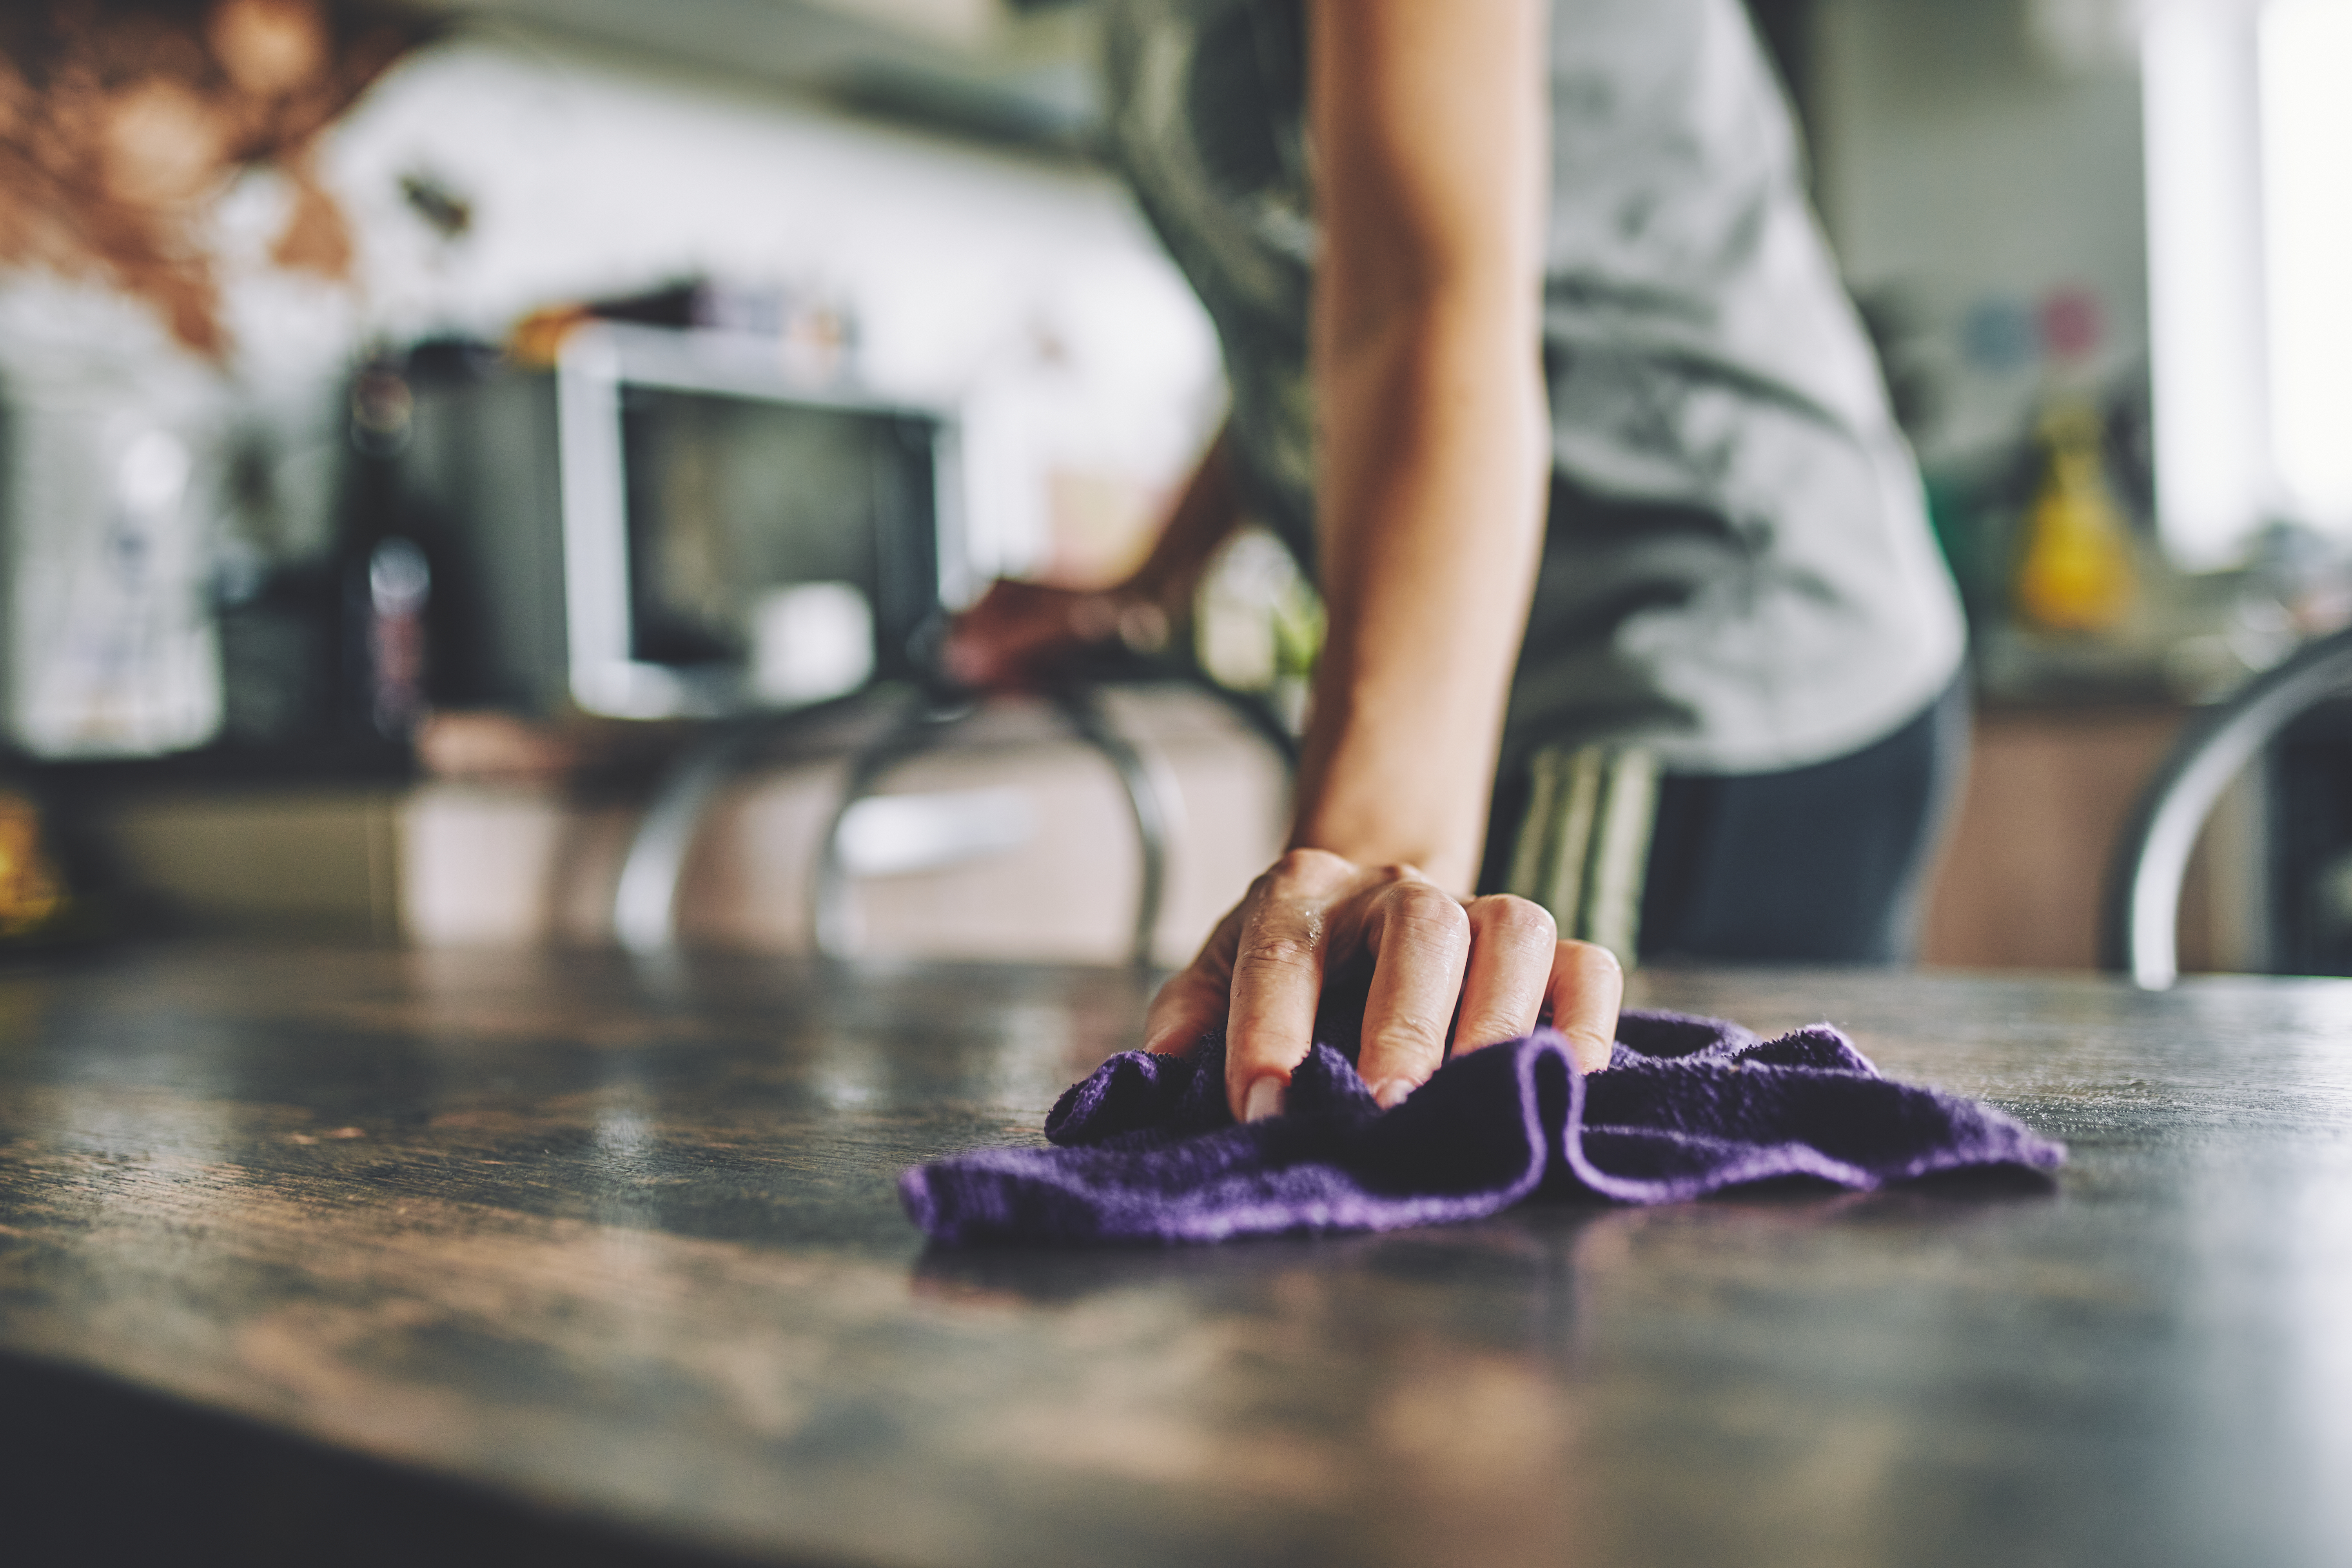 Une femme nettoie un comptoir | Source : Getty Images